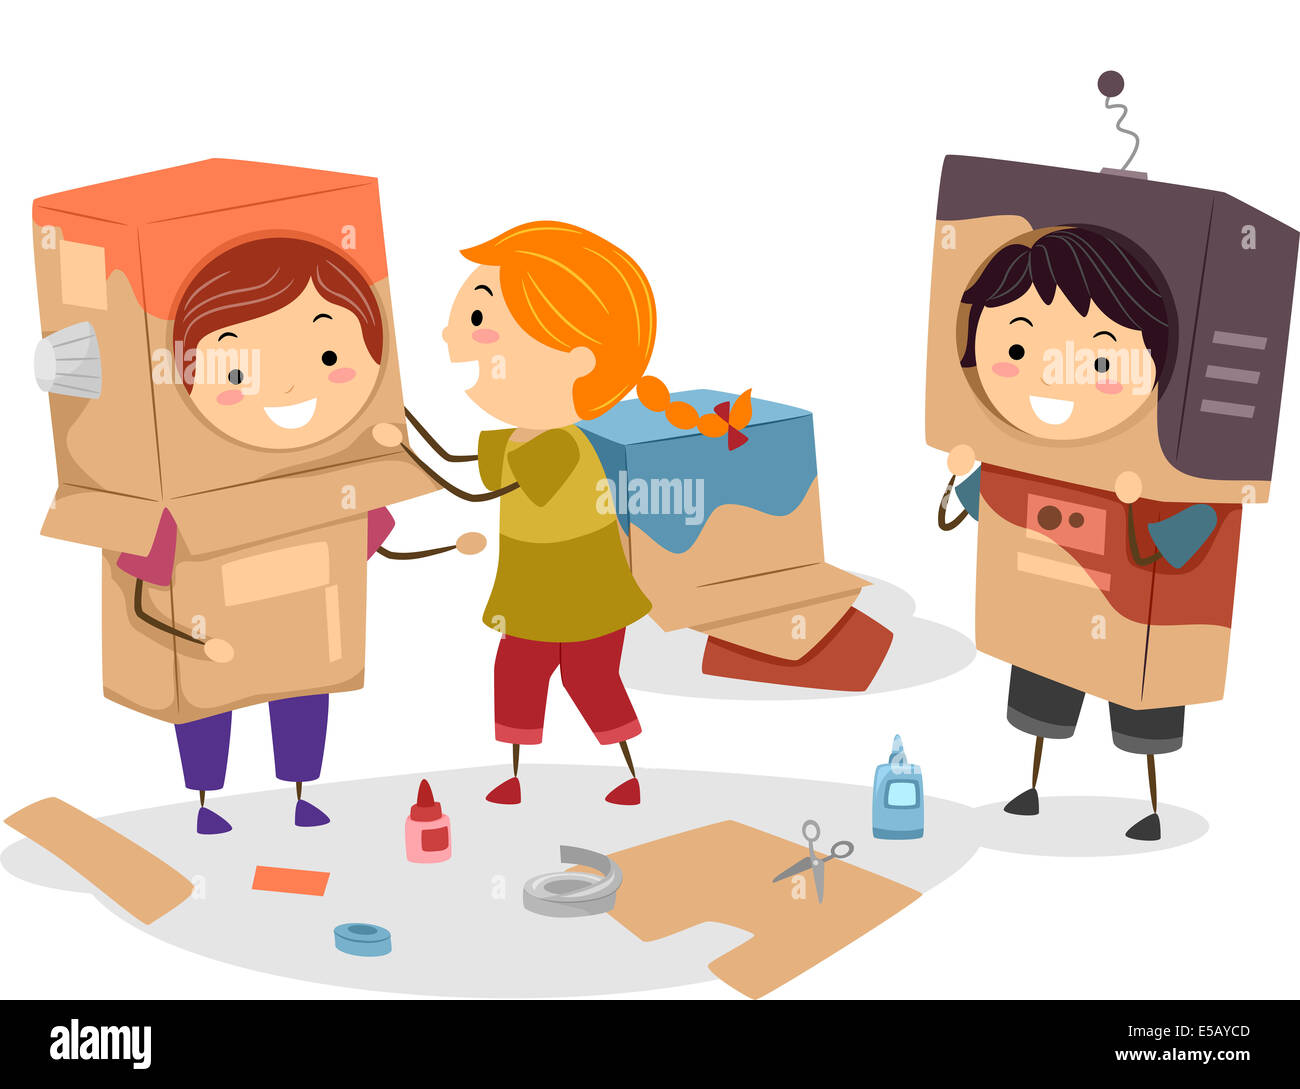 Illustration of Kids Making Makeshift Robots Using Cartons Stock Photo